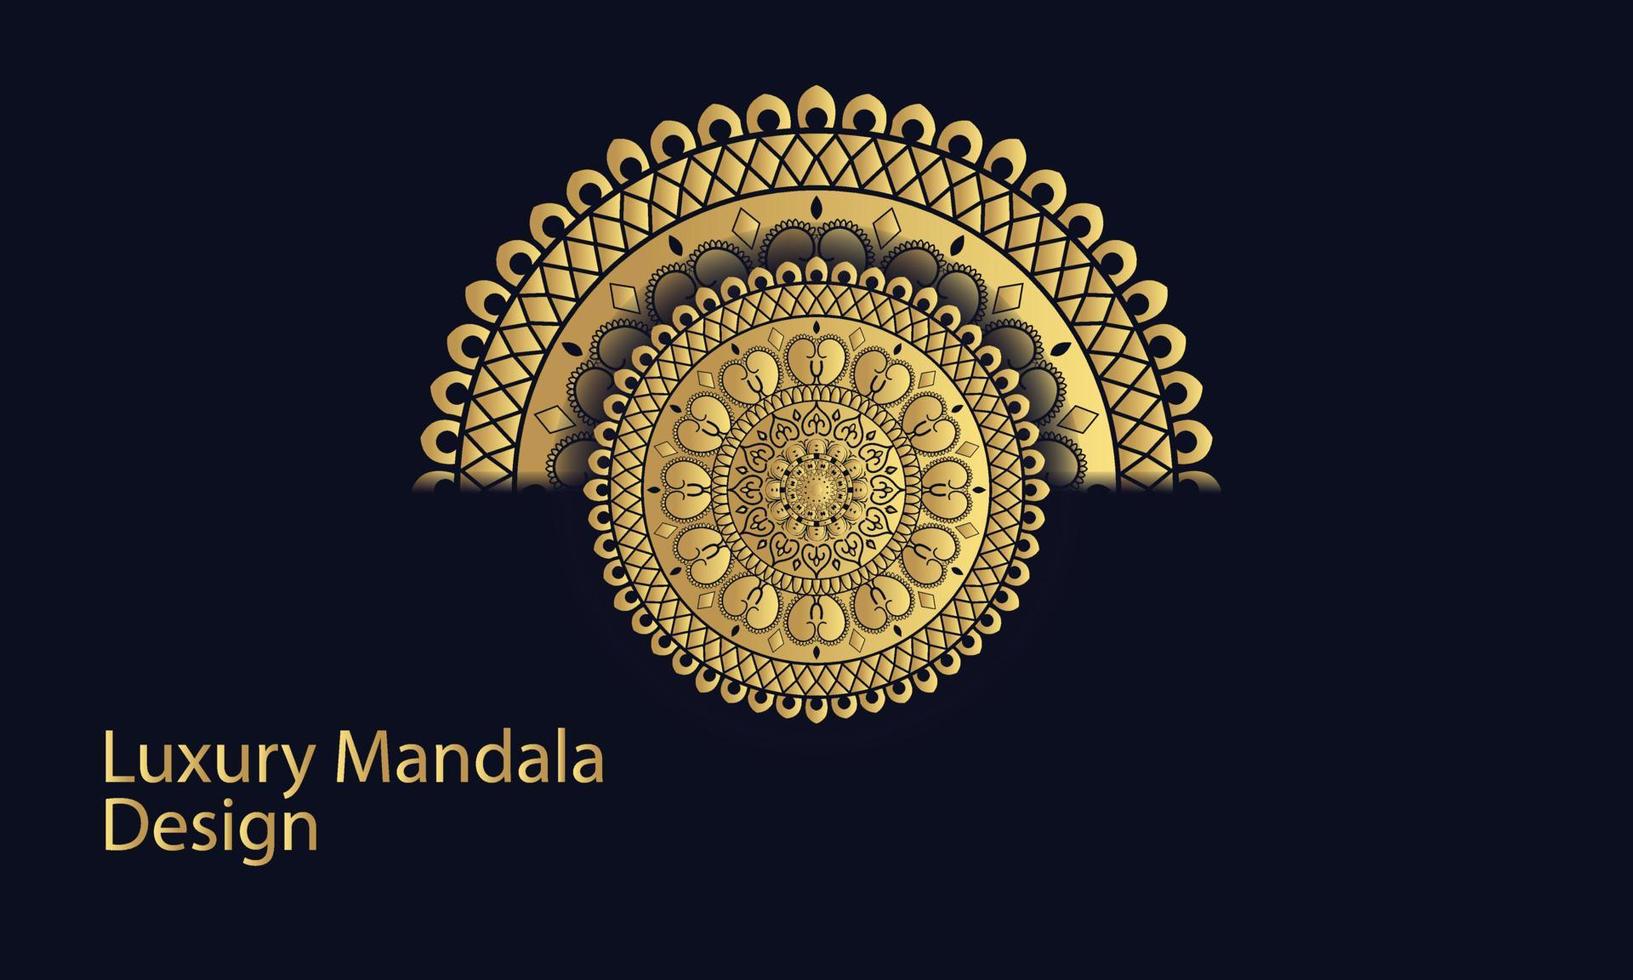 luxury mandala design vector background  vintage abstract floral pattern design